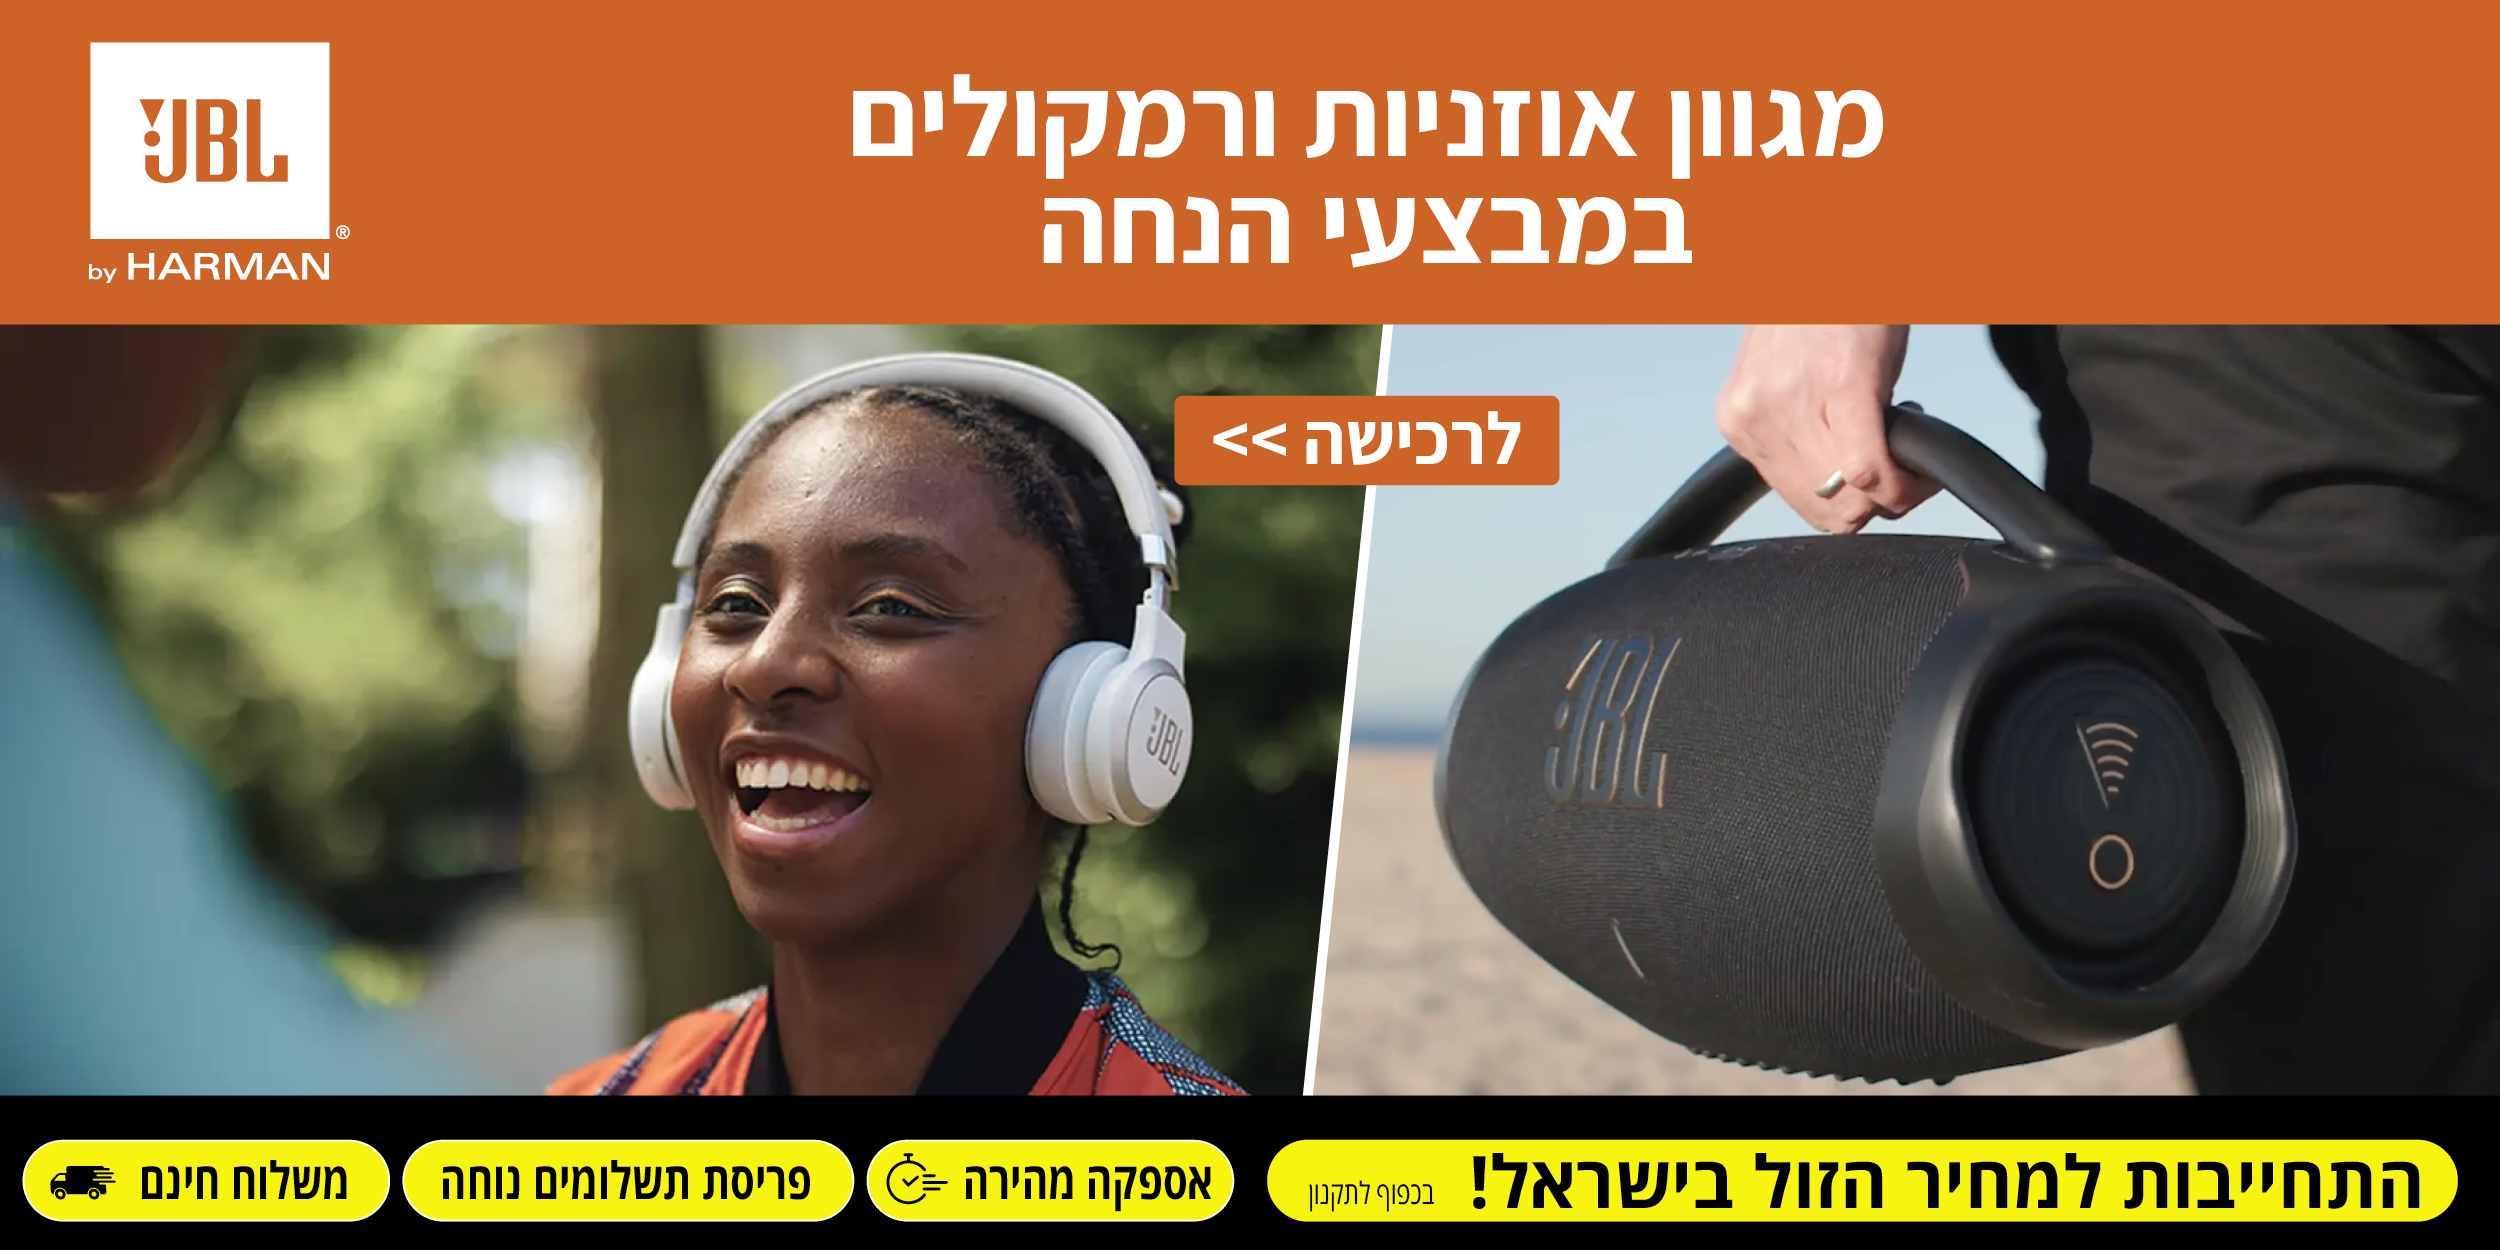 JBL מגוון אוזניות ורמקולים במבצעי הנחה. התחייבות למחיר הזול בישראל! בכפוף לתקנון, אספקה מהירה, פריסת תשלומים נוחה ומשלוח חינם.